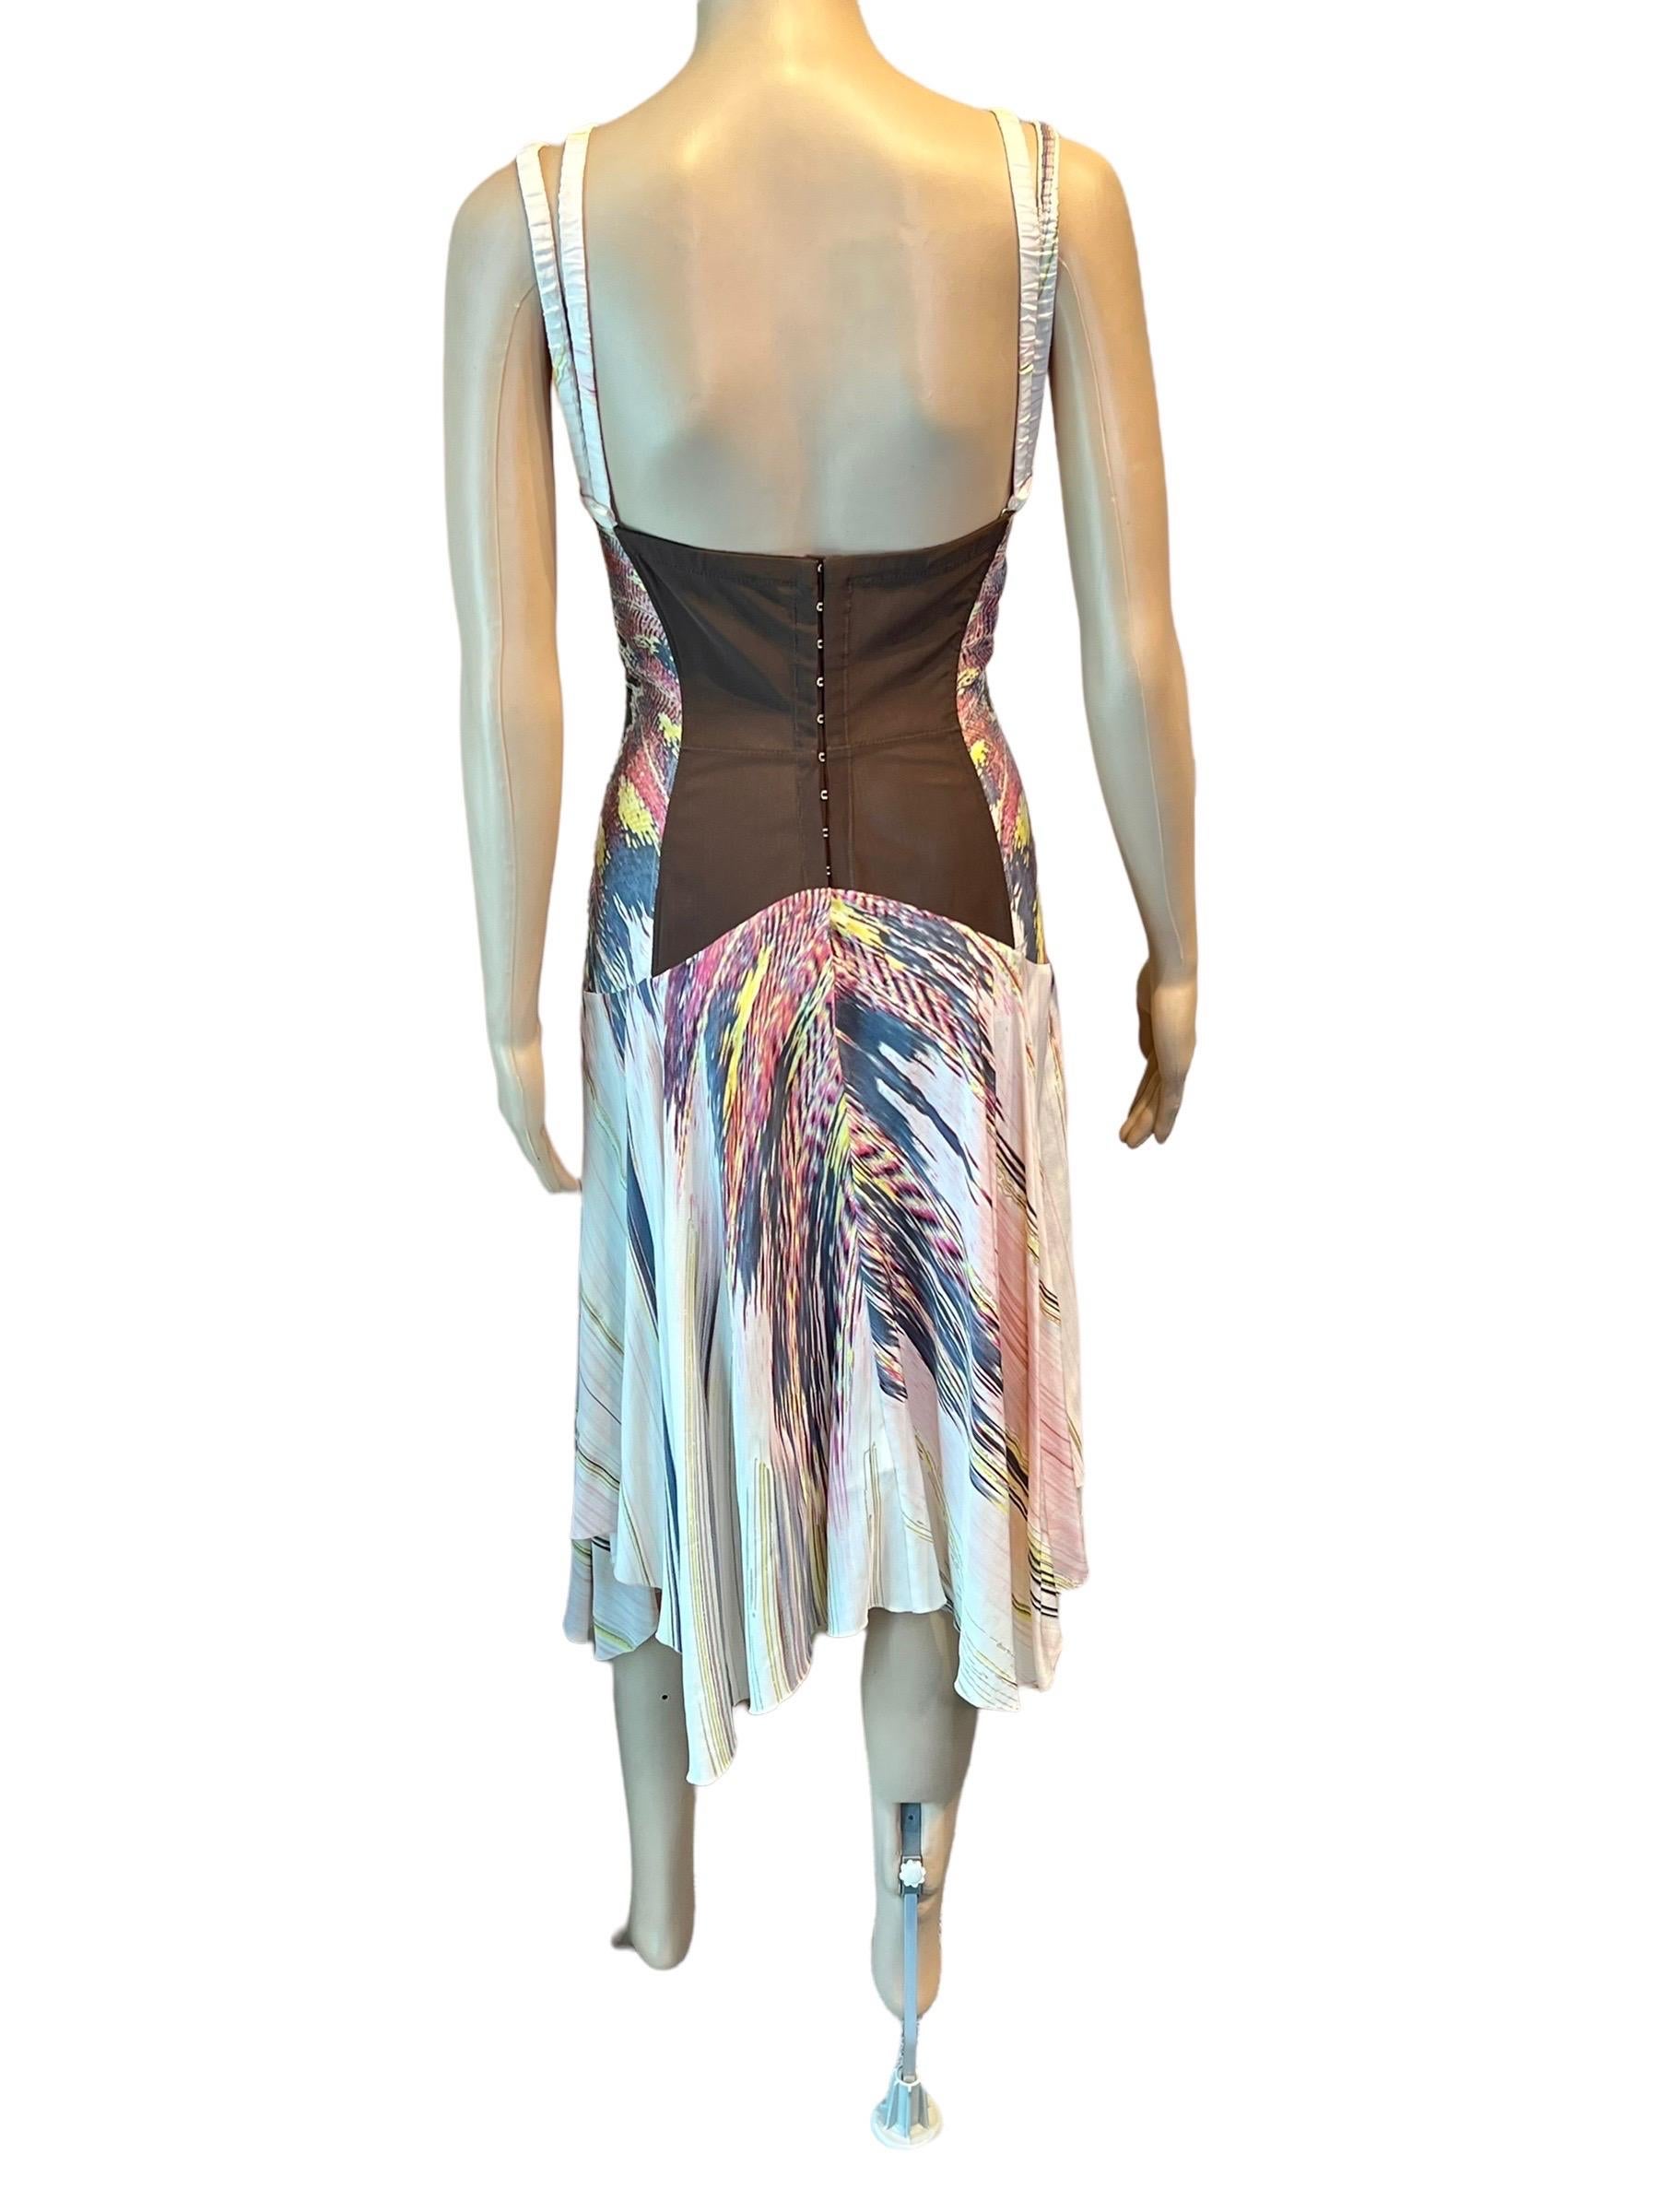 Roberto Cavalli S/S 2004 Bustier Corset Plunging Neckline Feather Print Dress For Sale 5